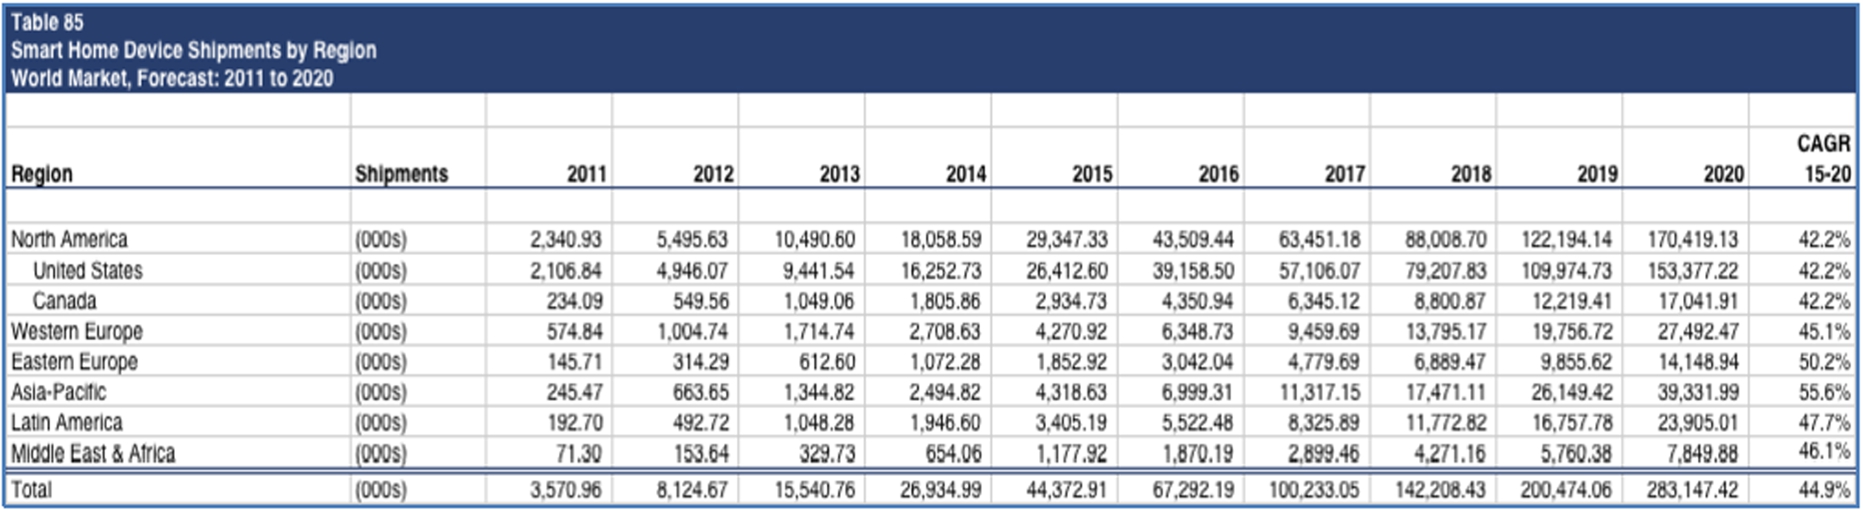 Smart home device shipments by region: world market forecast 2011–2020 [3]